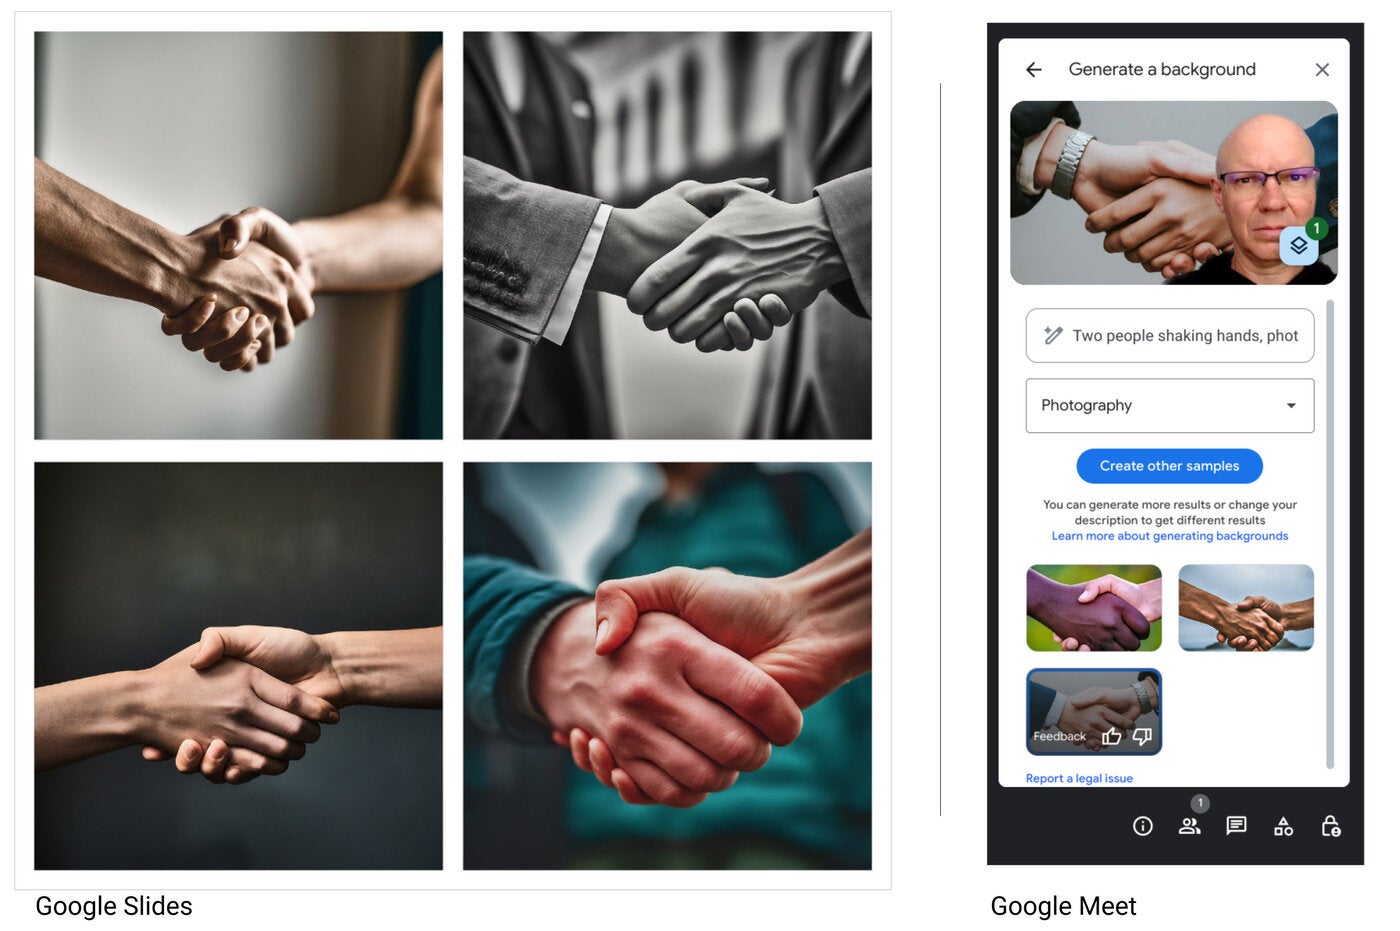 Gemini-generated handshake images in Google Slides (left) and Google Meet (right).